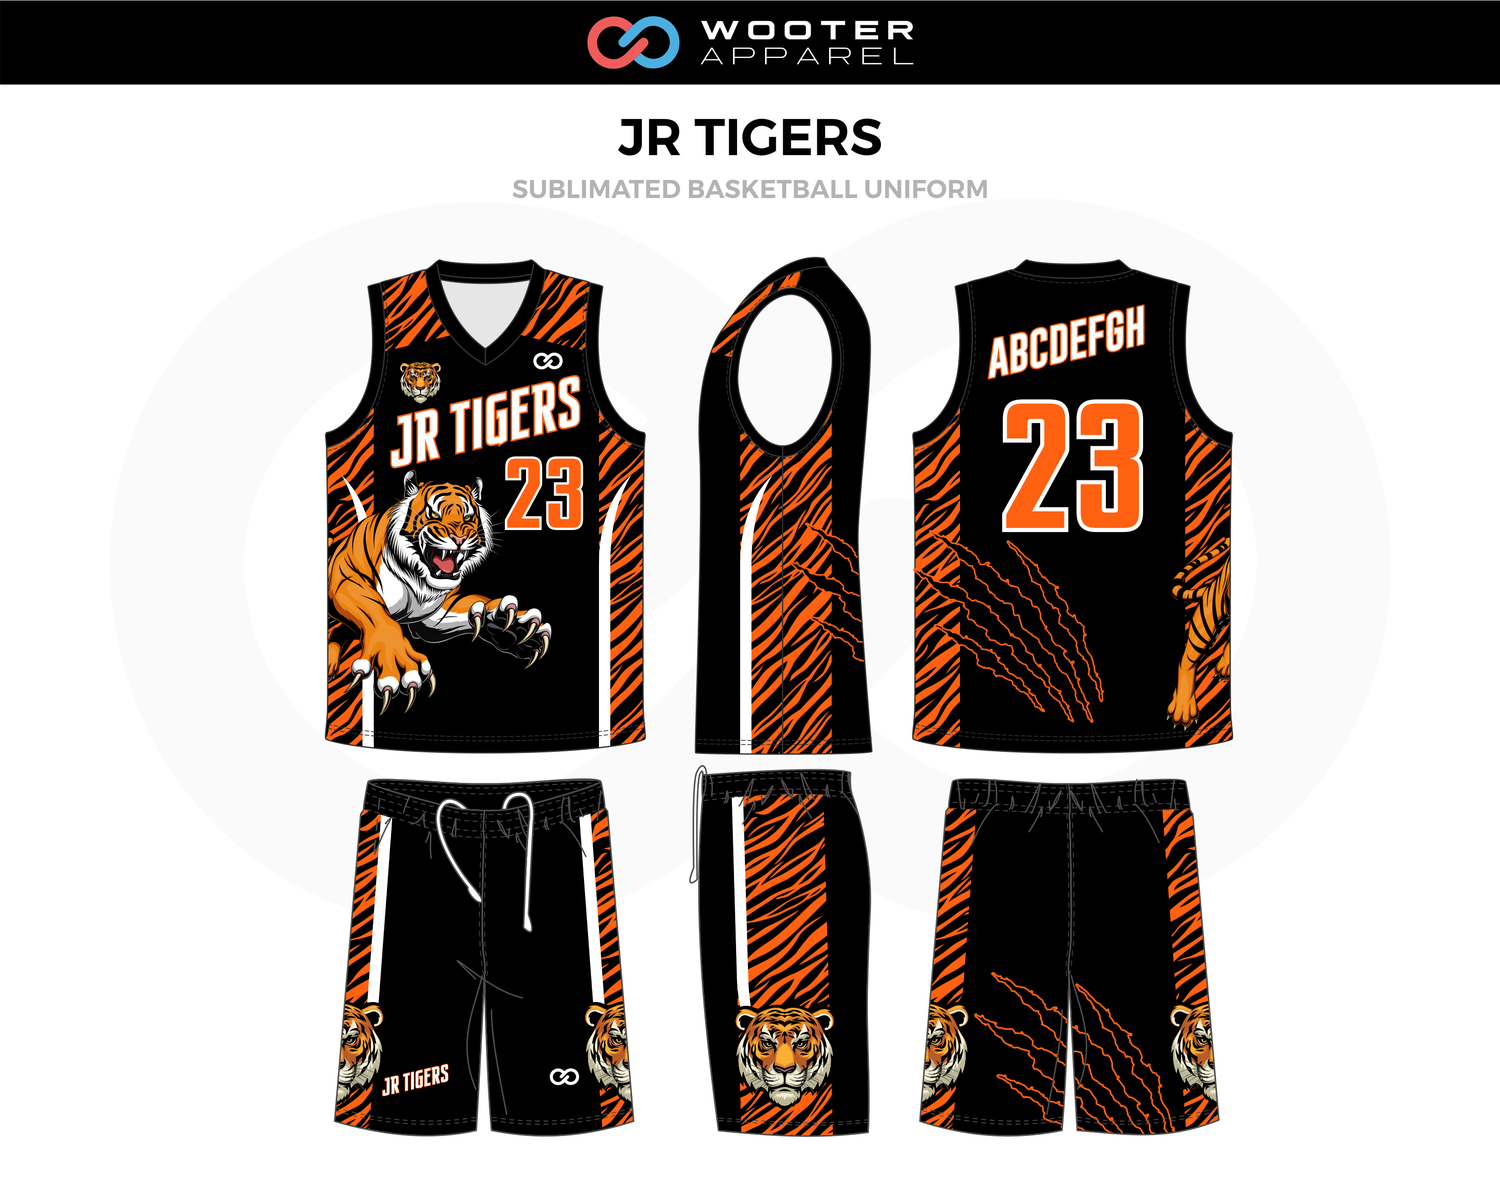 Custom Basketball Uniform - Tigers - Black and orange